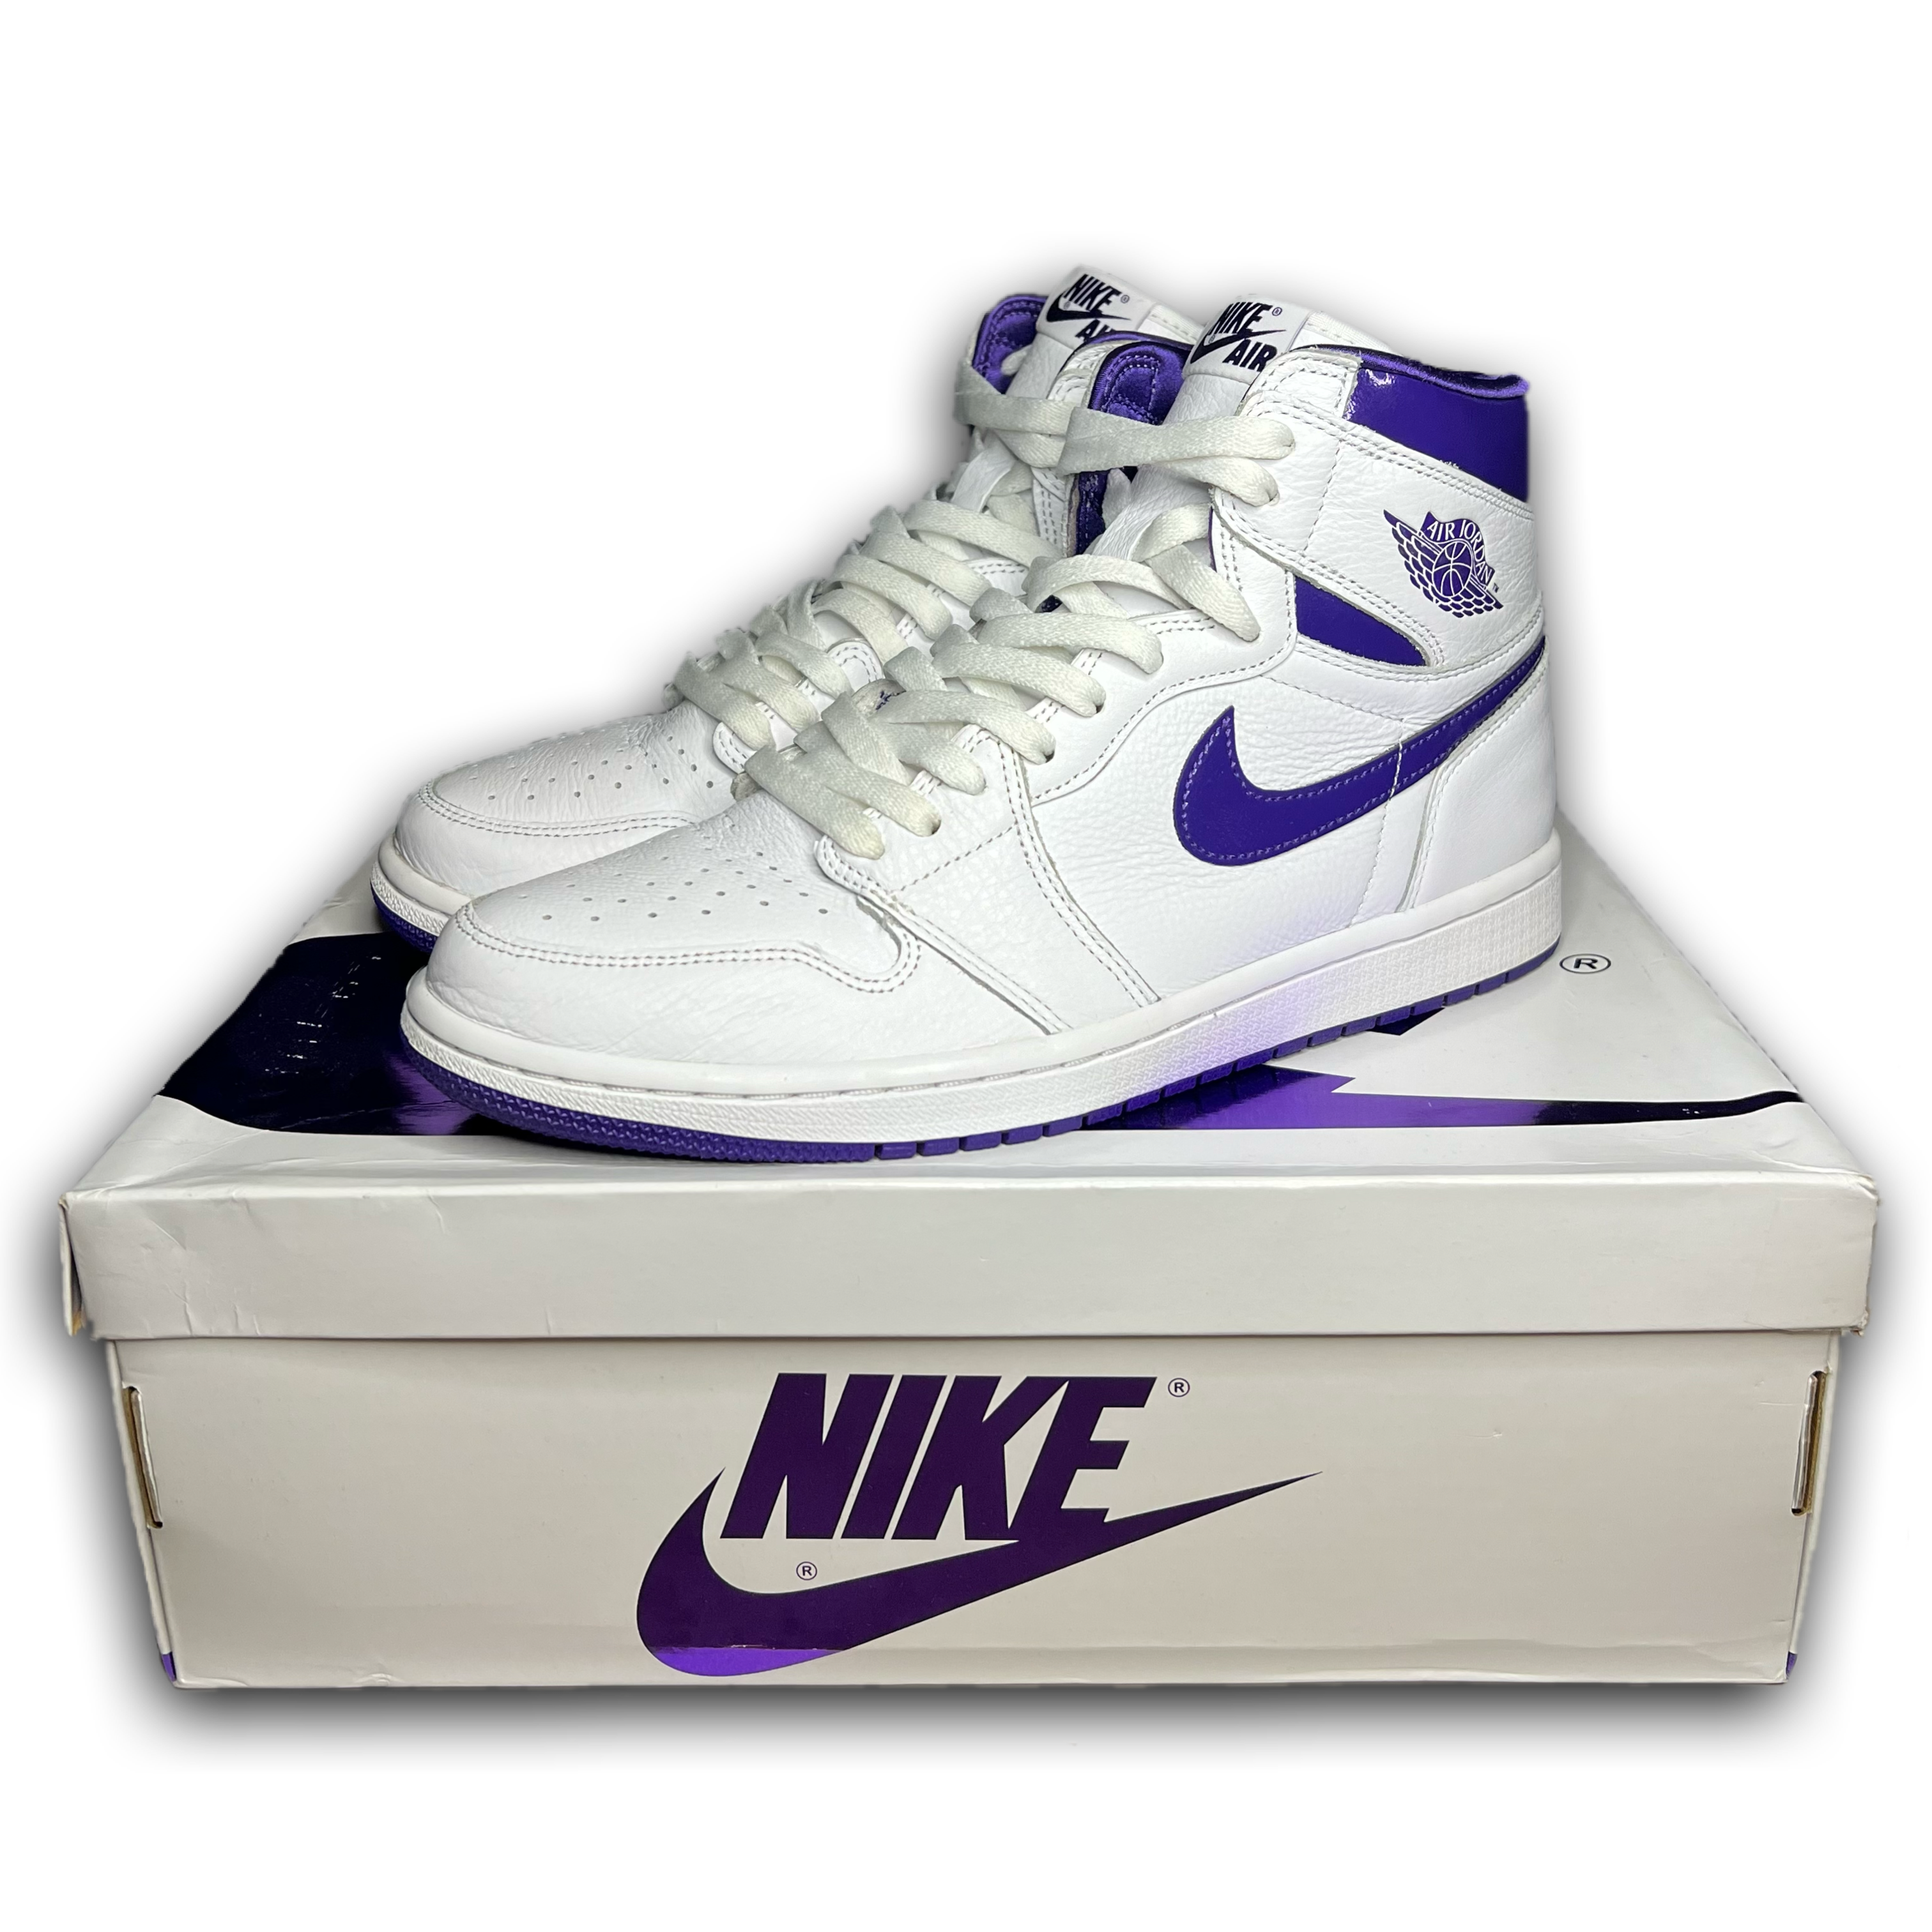 Jordan 1 “Court Purple” (Size 10.5W)